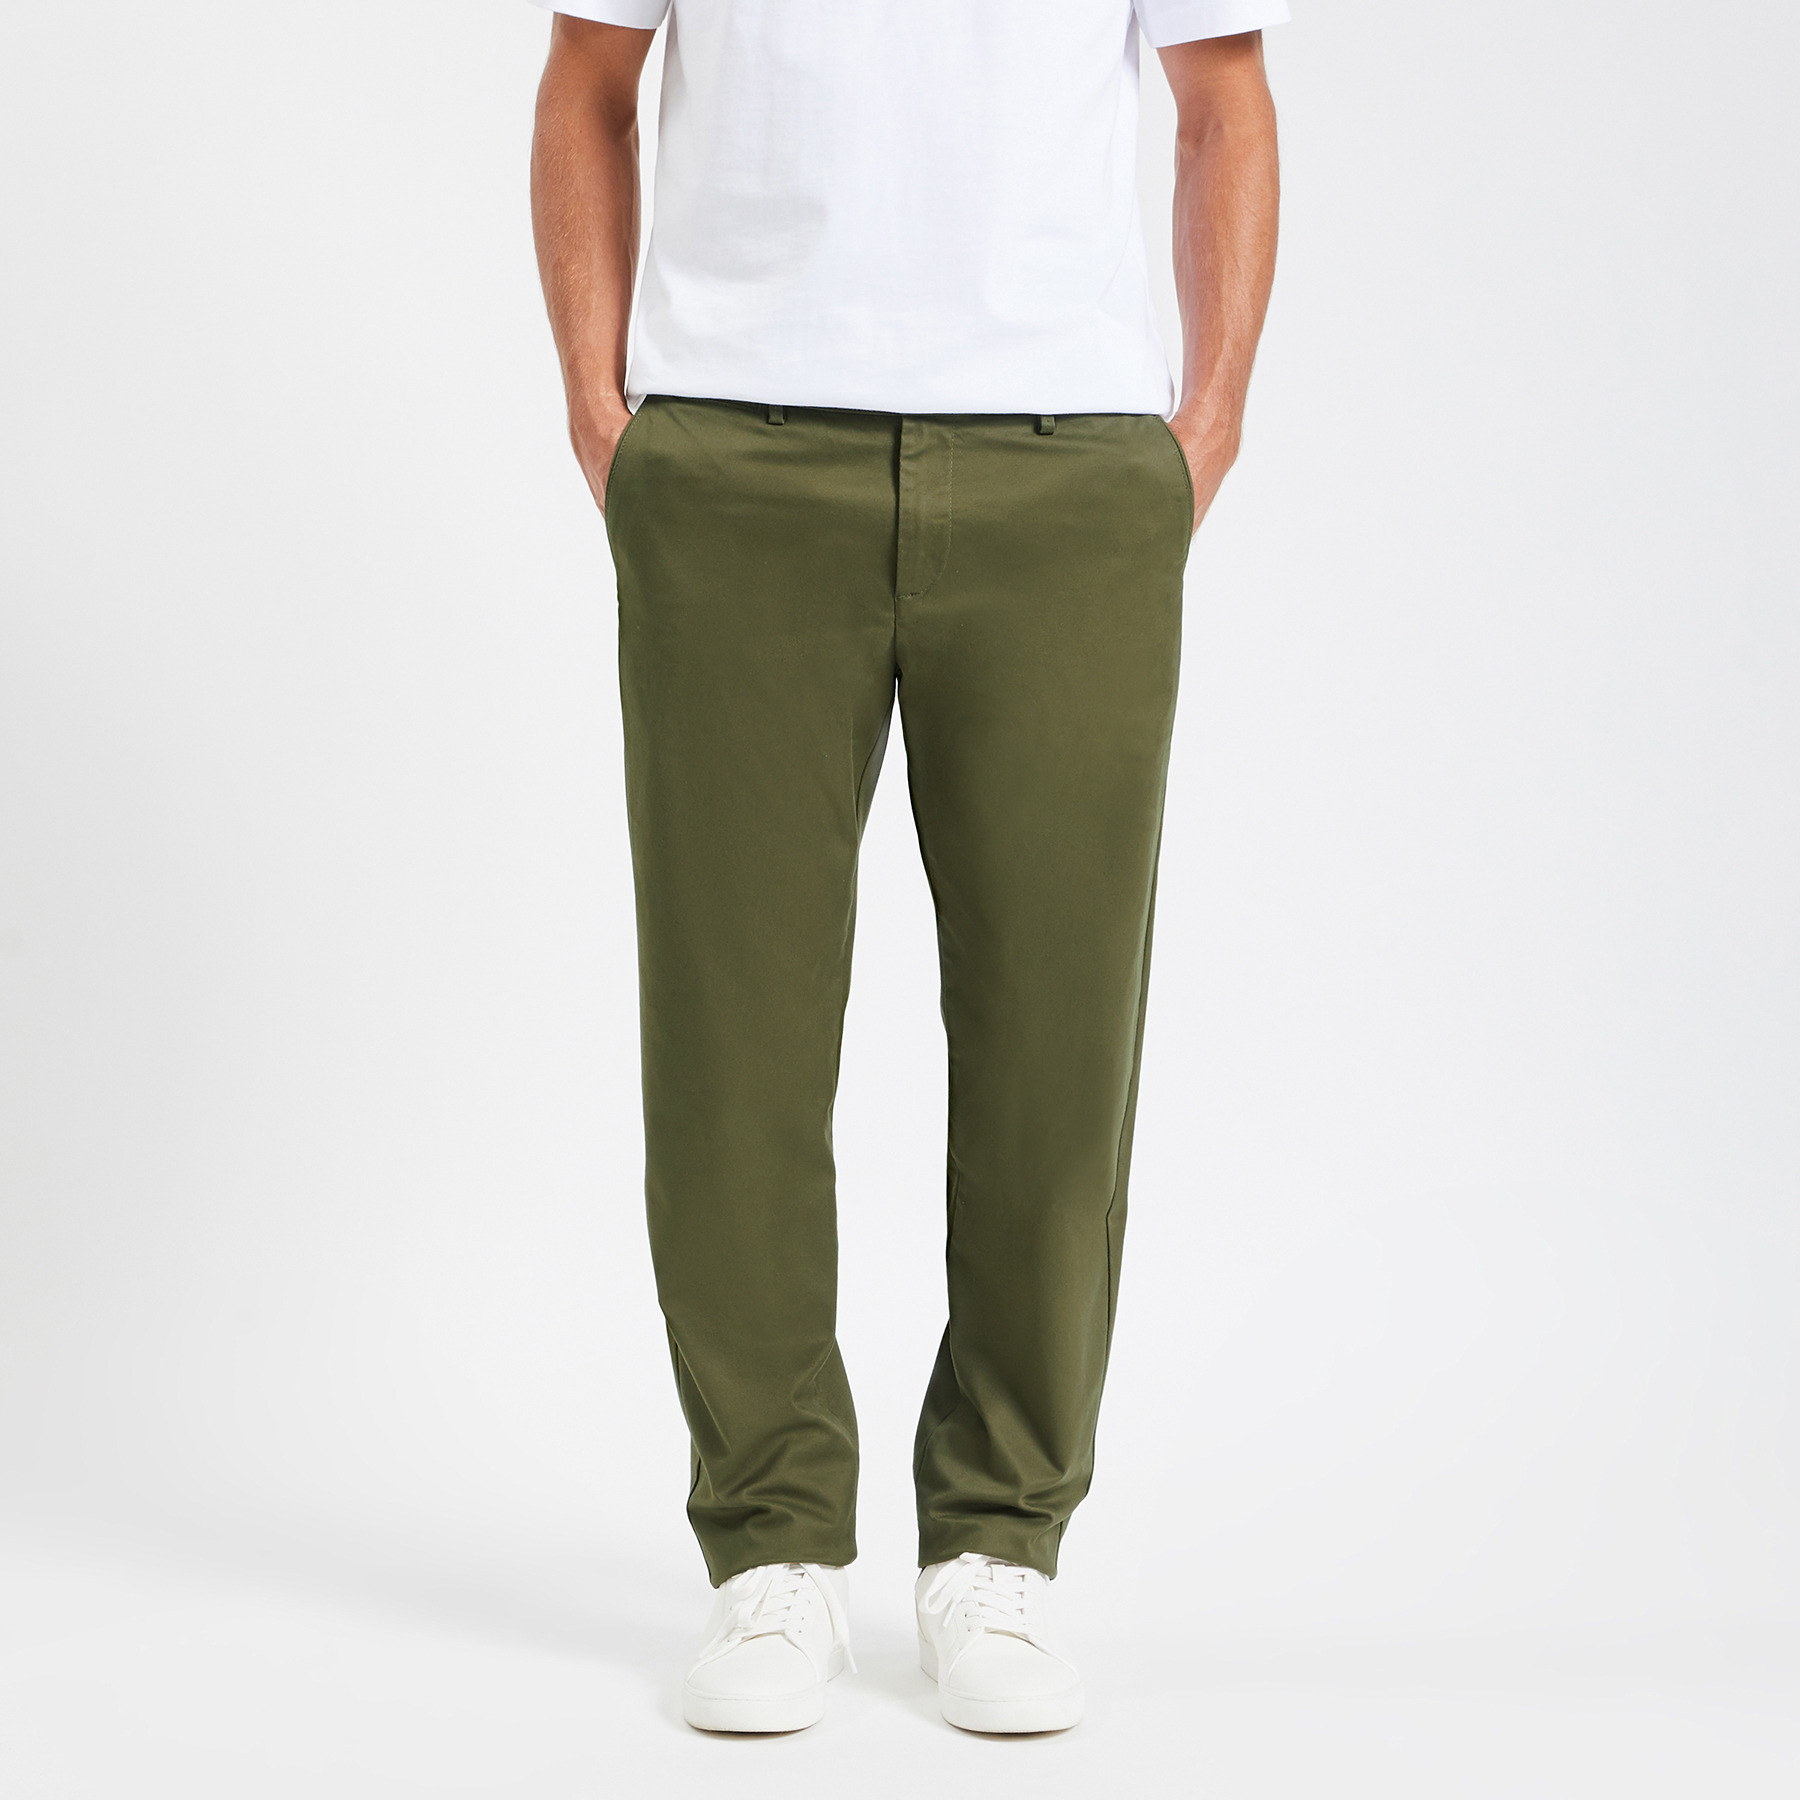 Pantalon chino regular "le parfait by JULES" Vert kaki 38 98% Coton, 2% Elasthanne Homme Brice